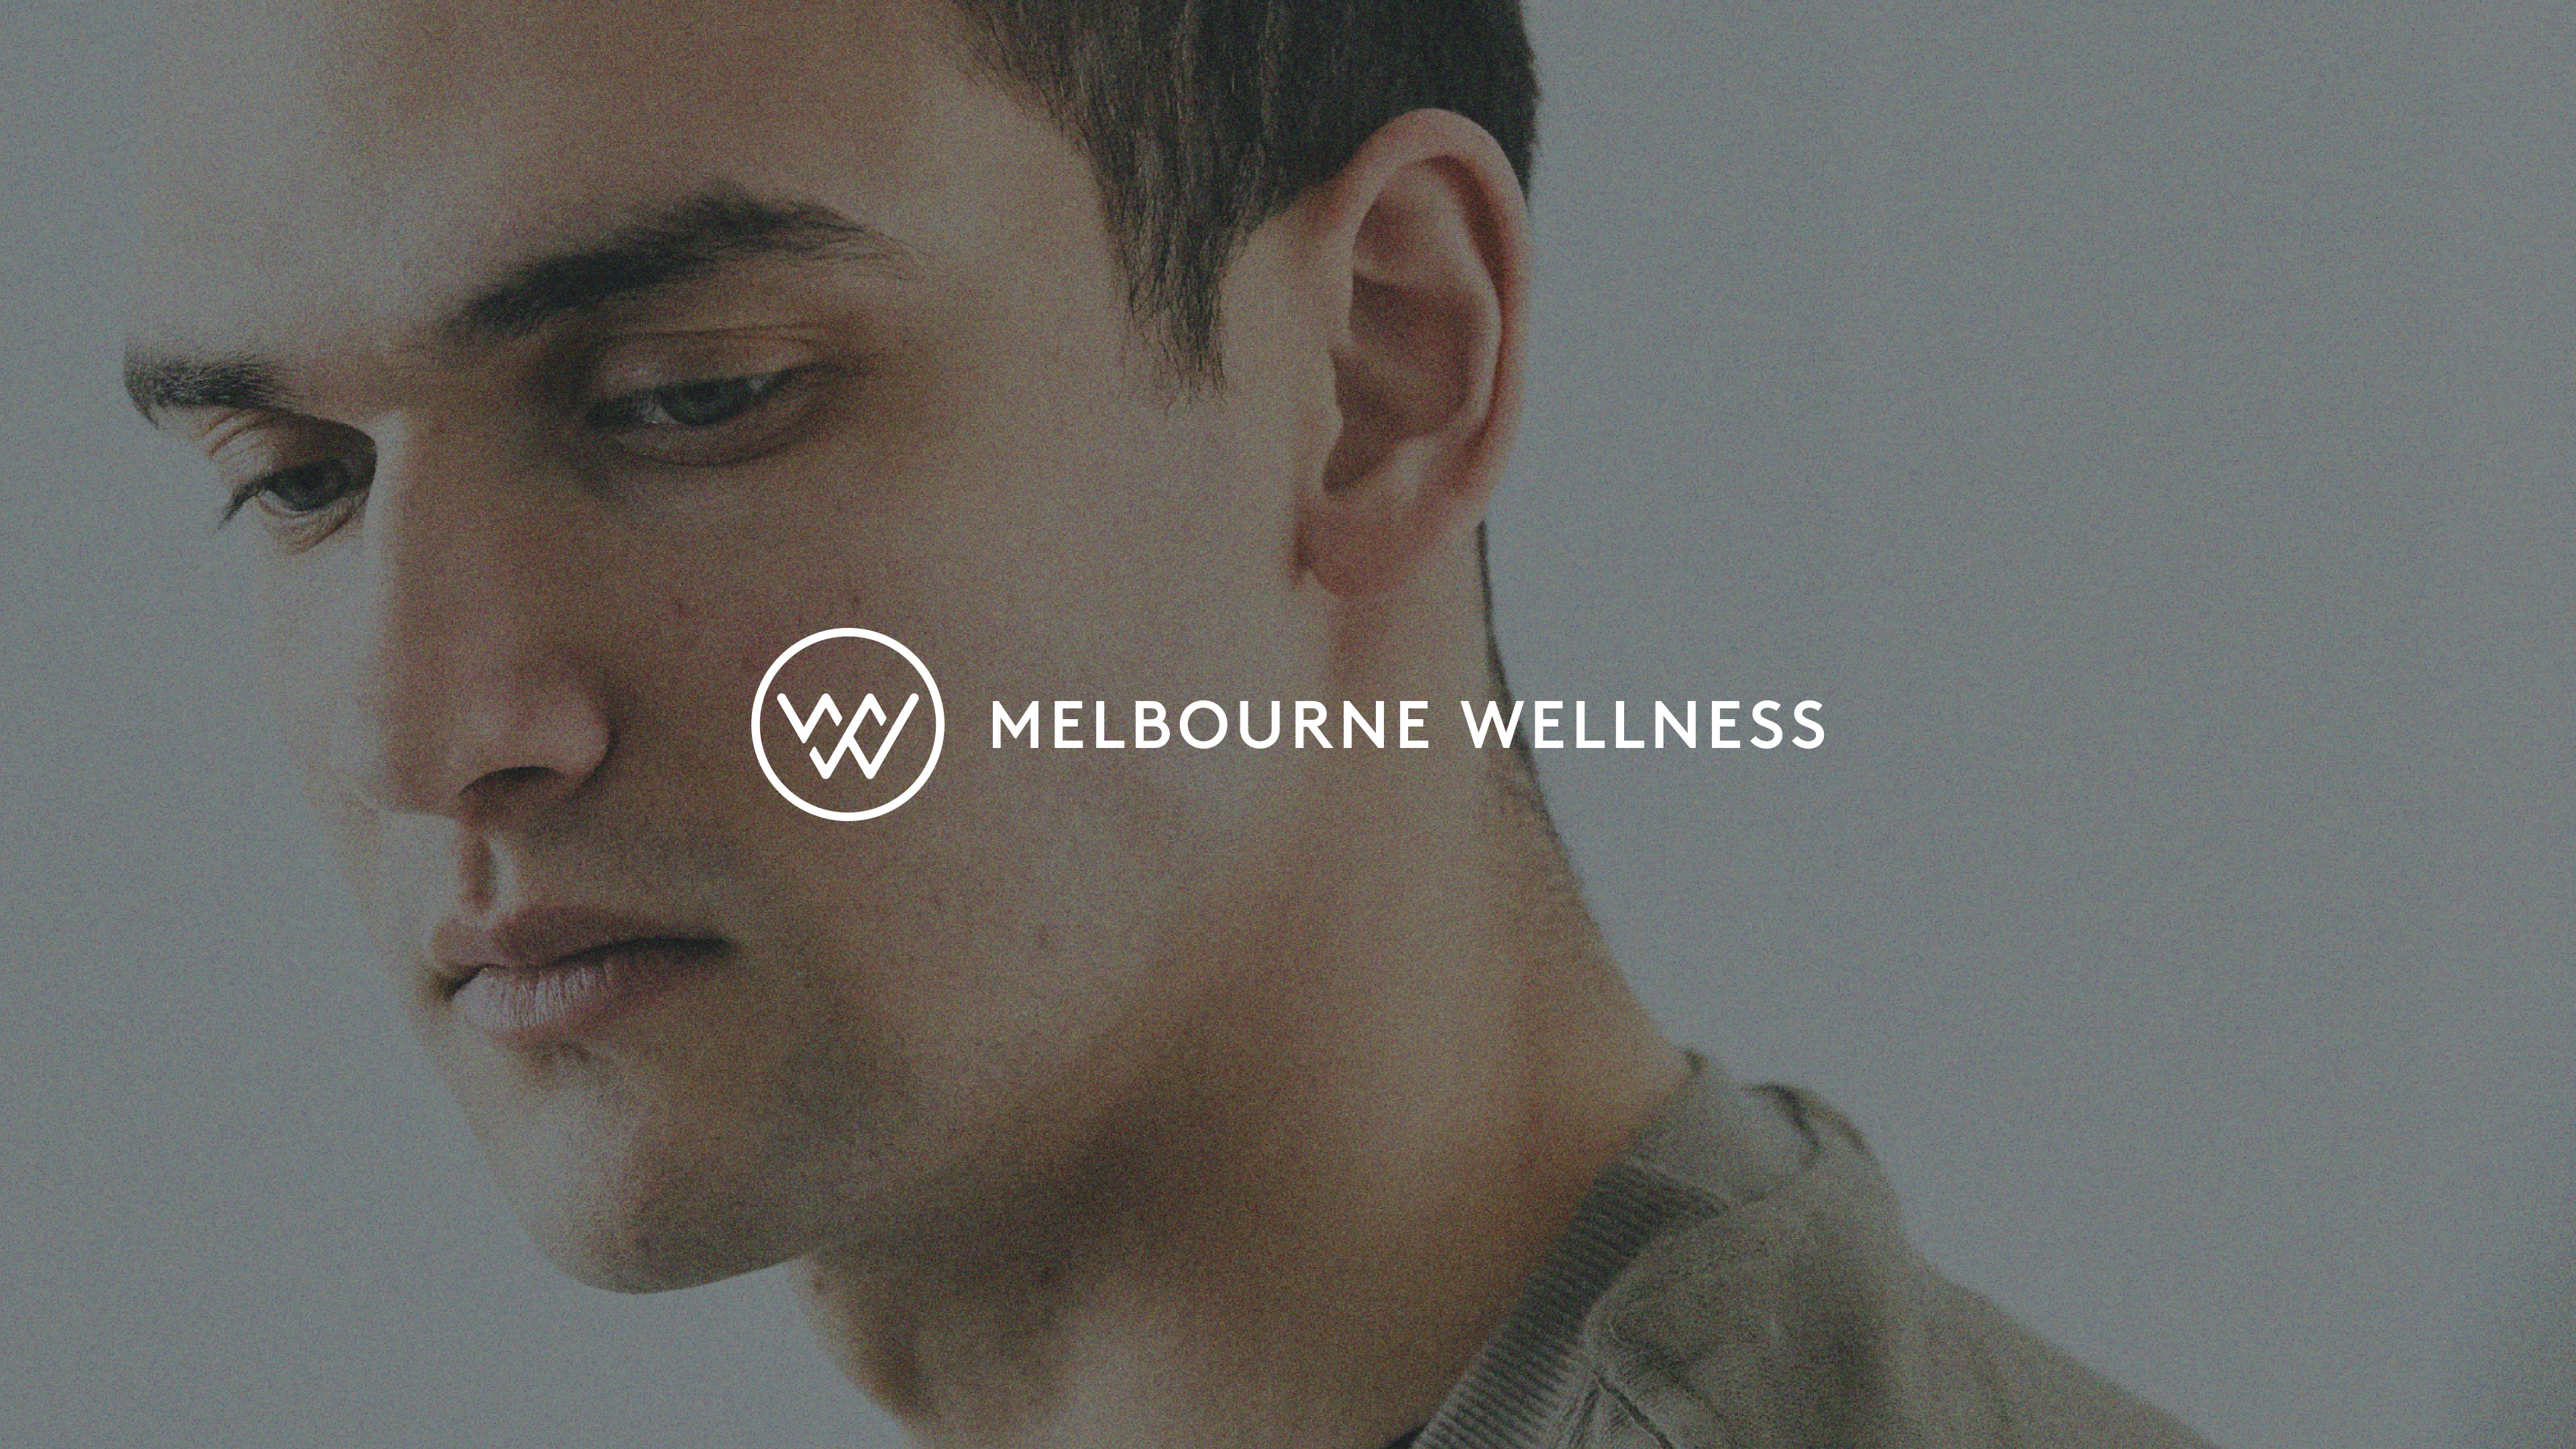 Melbourne Wellness wordmark logo lockup over lifestyle image of man looking downward